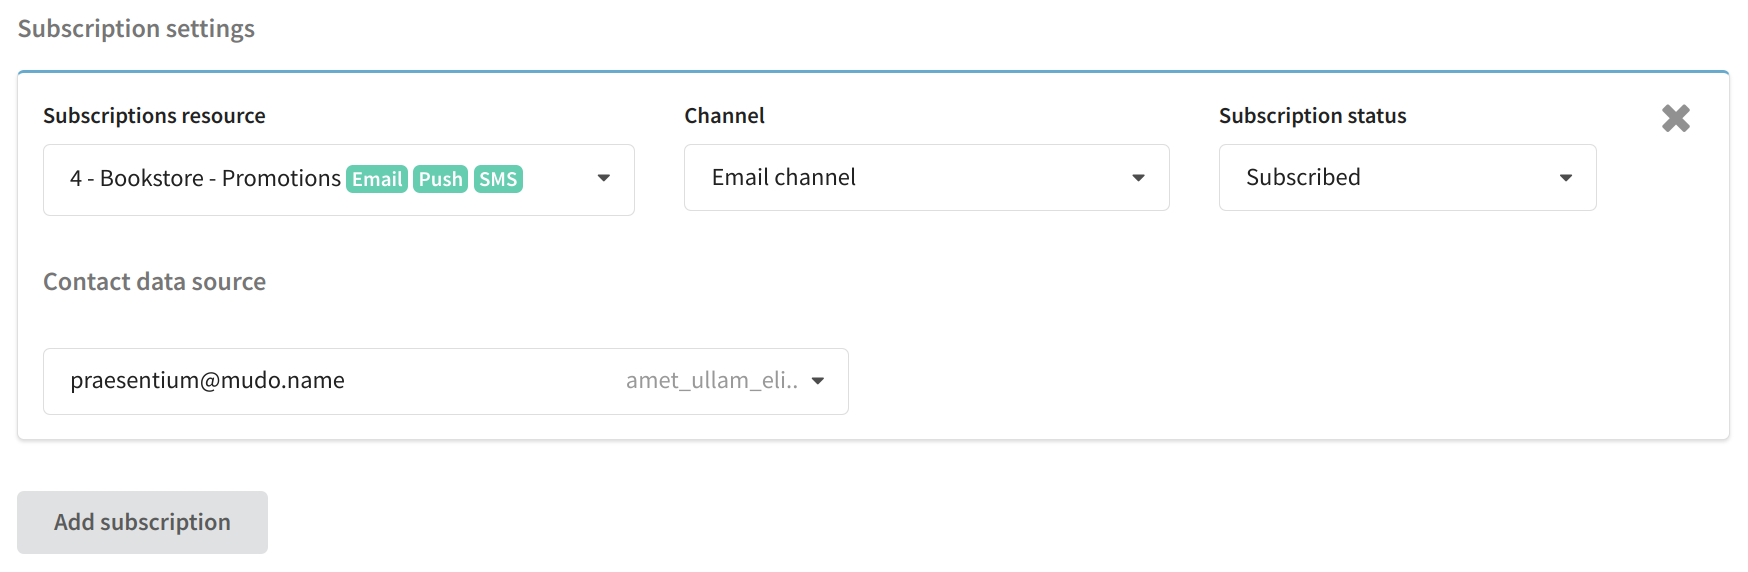 Configure subscription settings & select channel